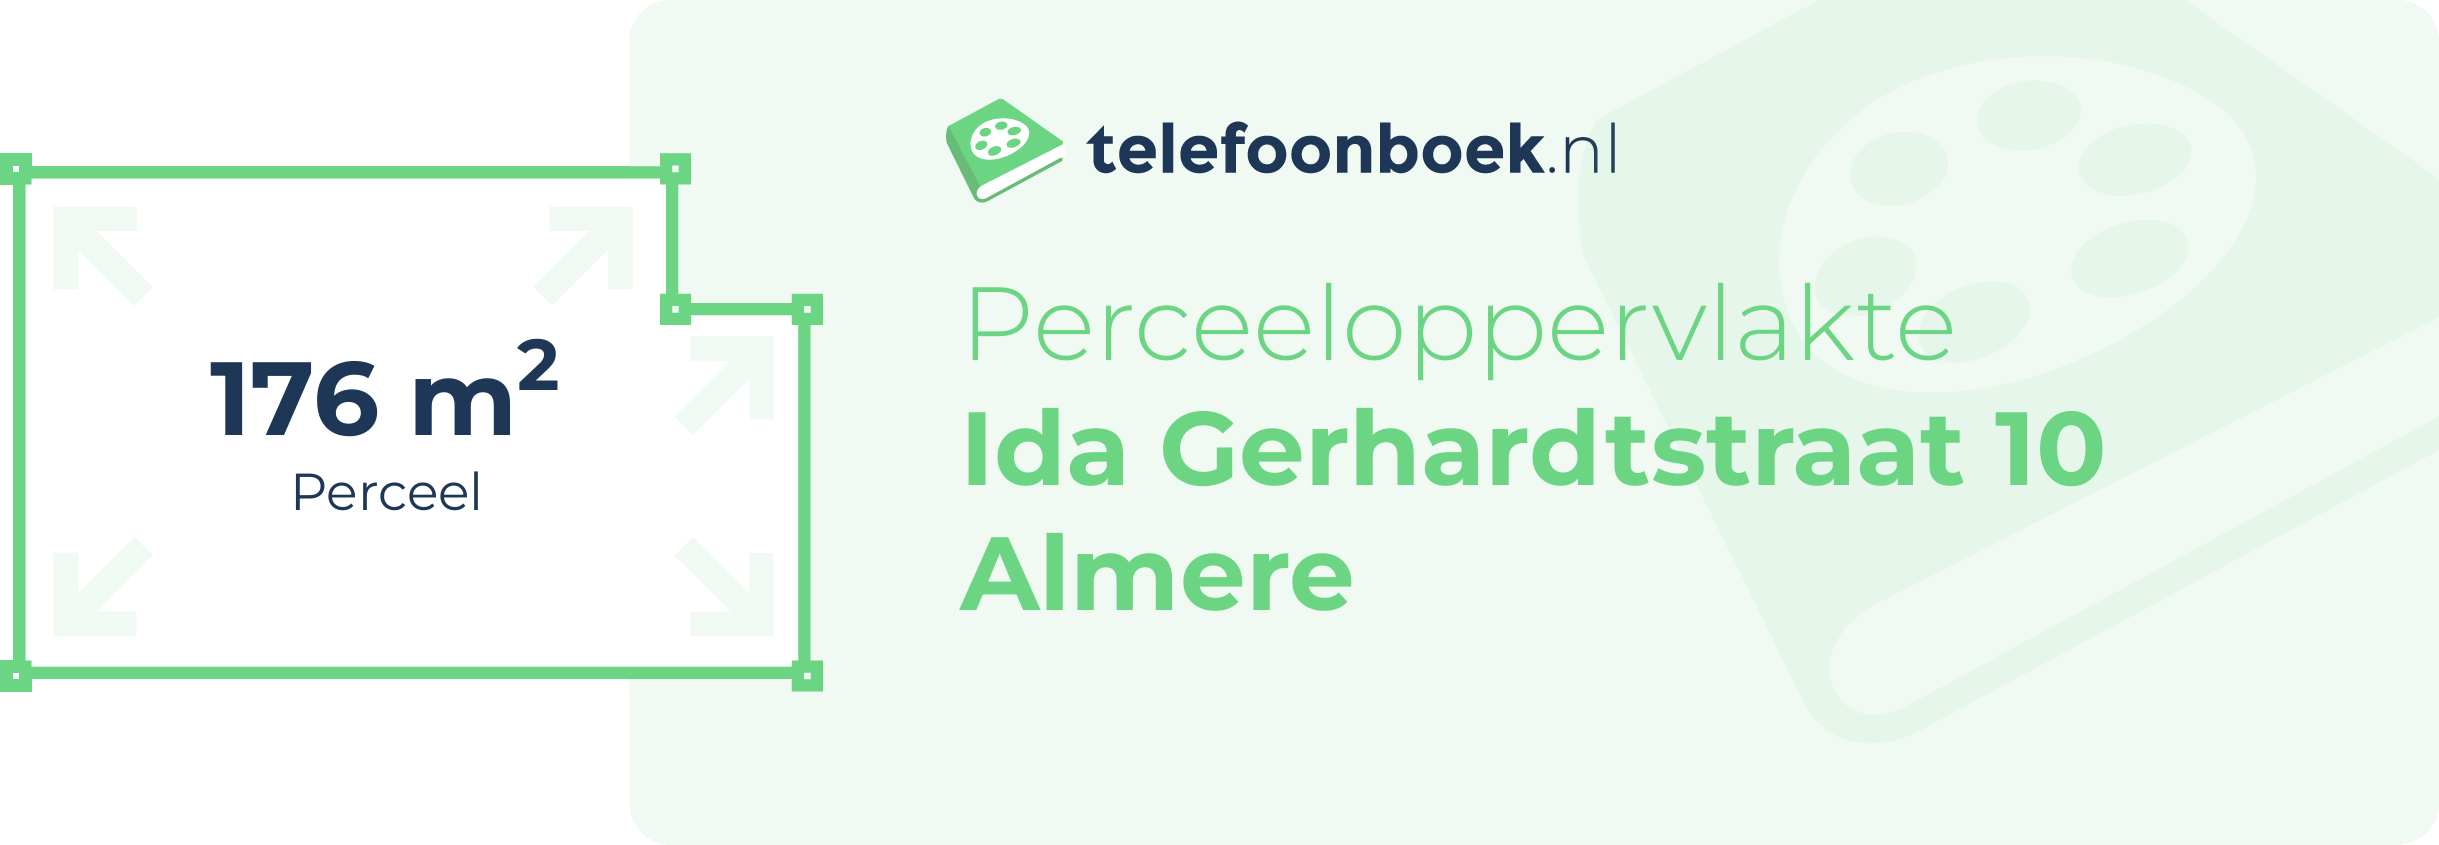 Perceeloppervlakte Ida Gerhardtstraat 10 Almere